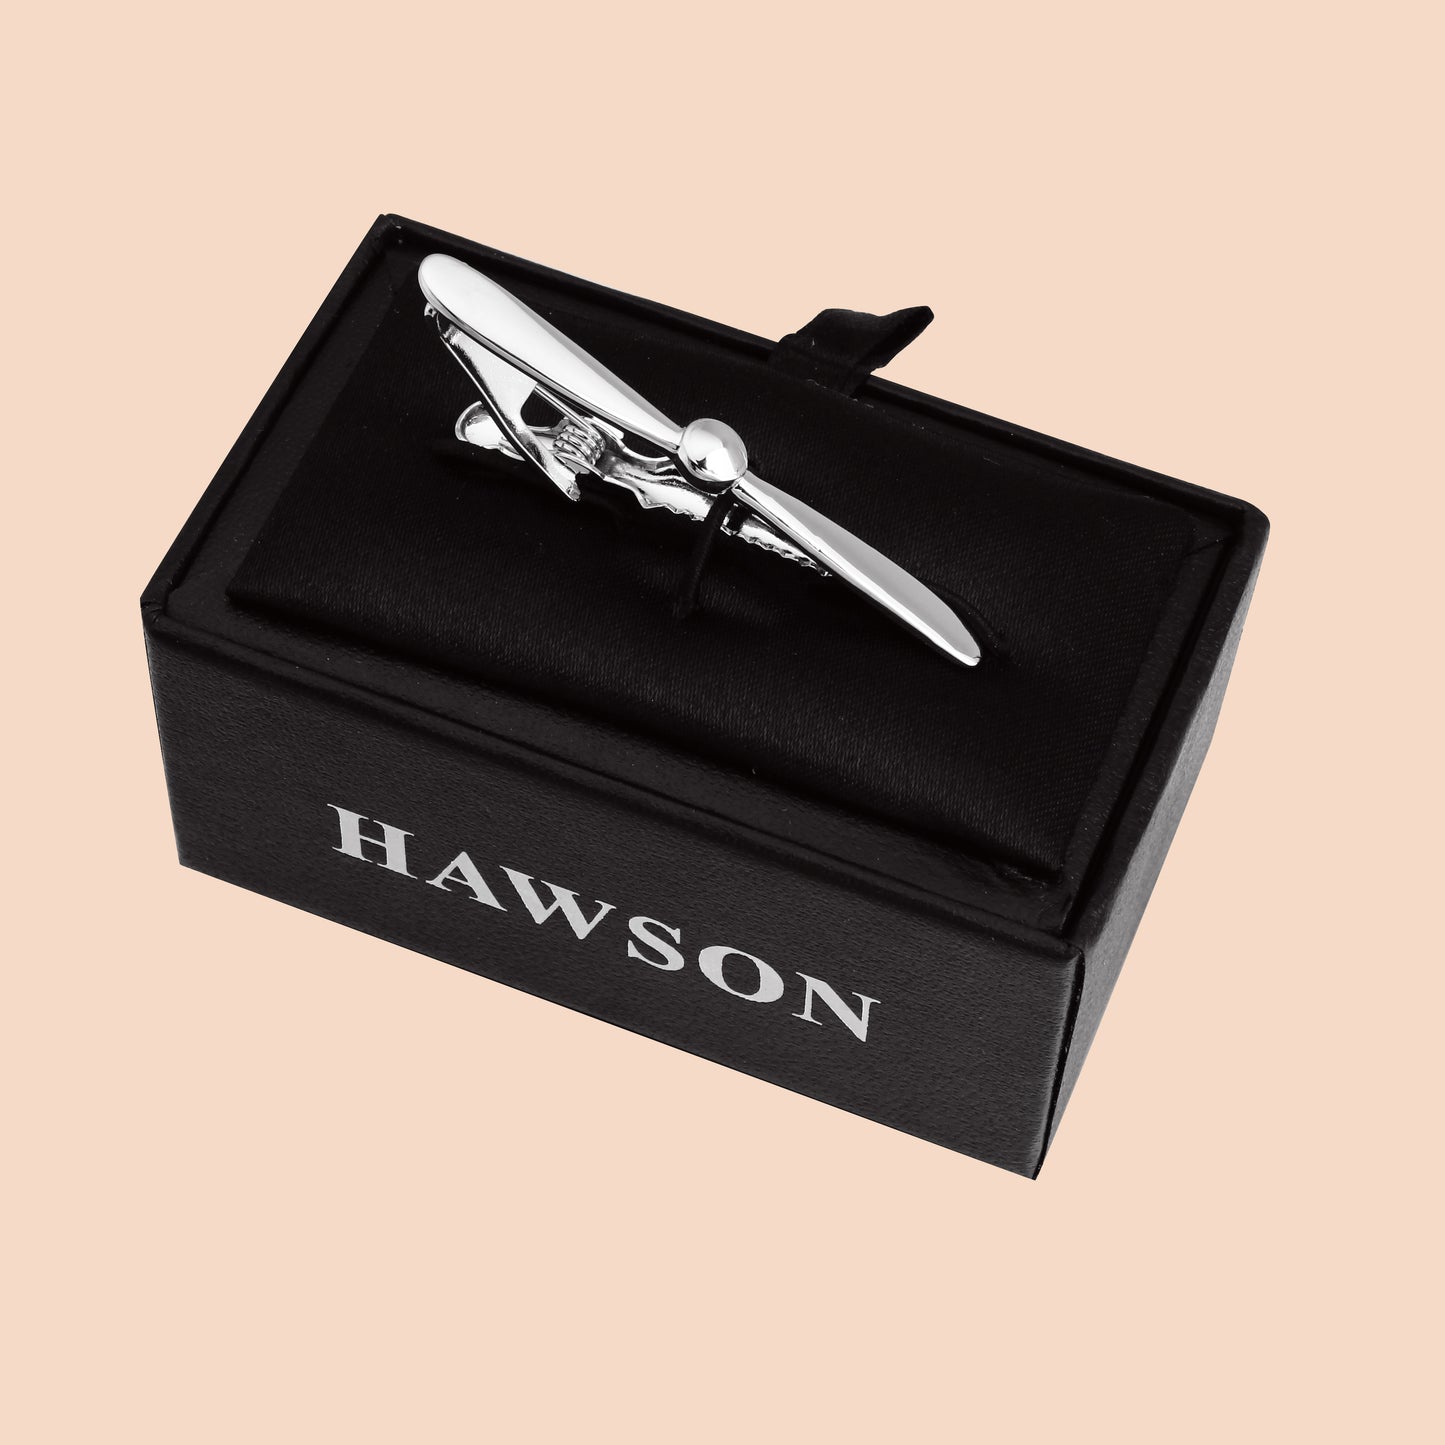 HAWSON 2 inch Novelty Propeller Silver Tone Tie Clip for Men